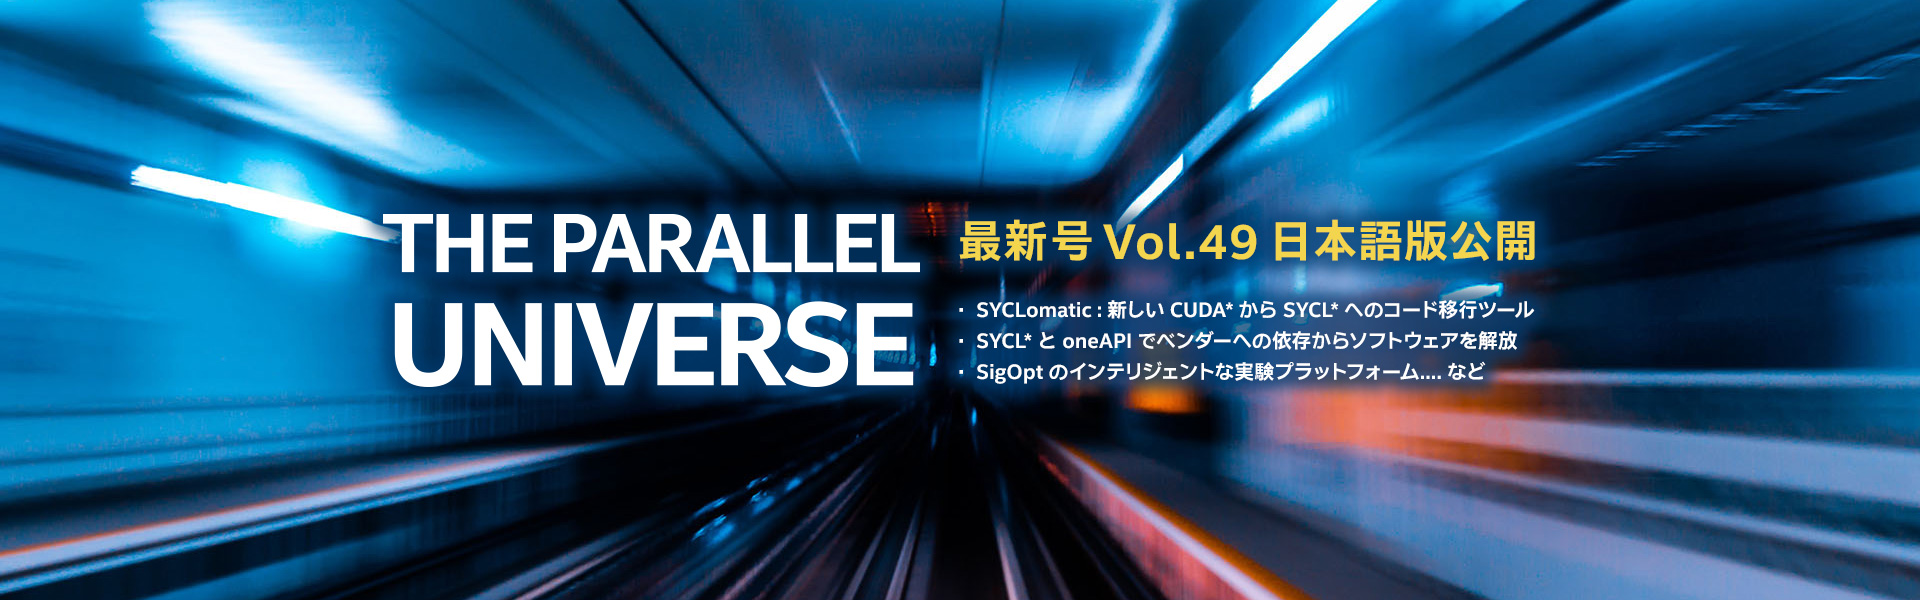 The Parallel Universe 最新号 Vol.49 日本語版公開中